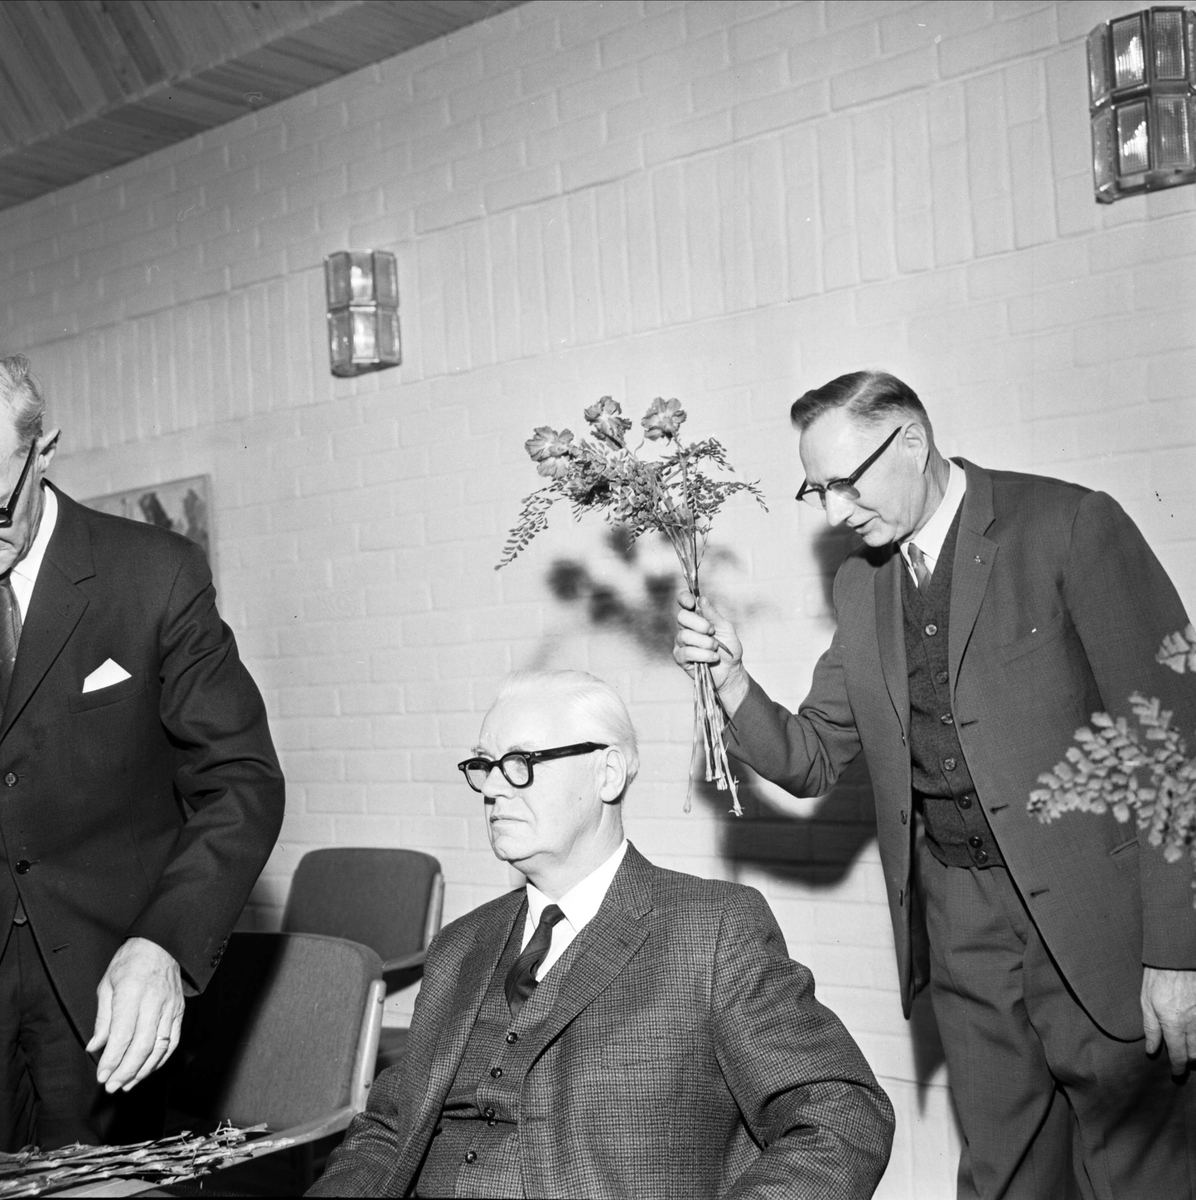 Kyrkofullmäktige hyllar Tierps IF, Tierp, Uppland december 1966